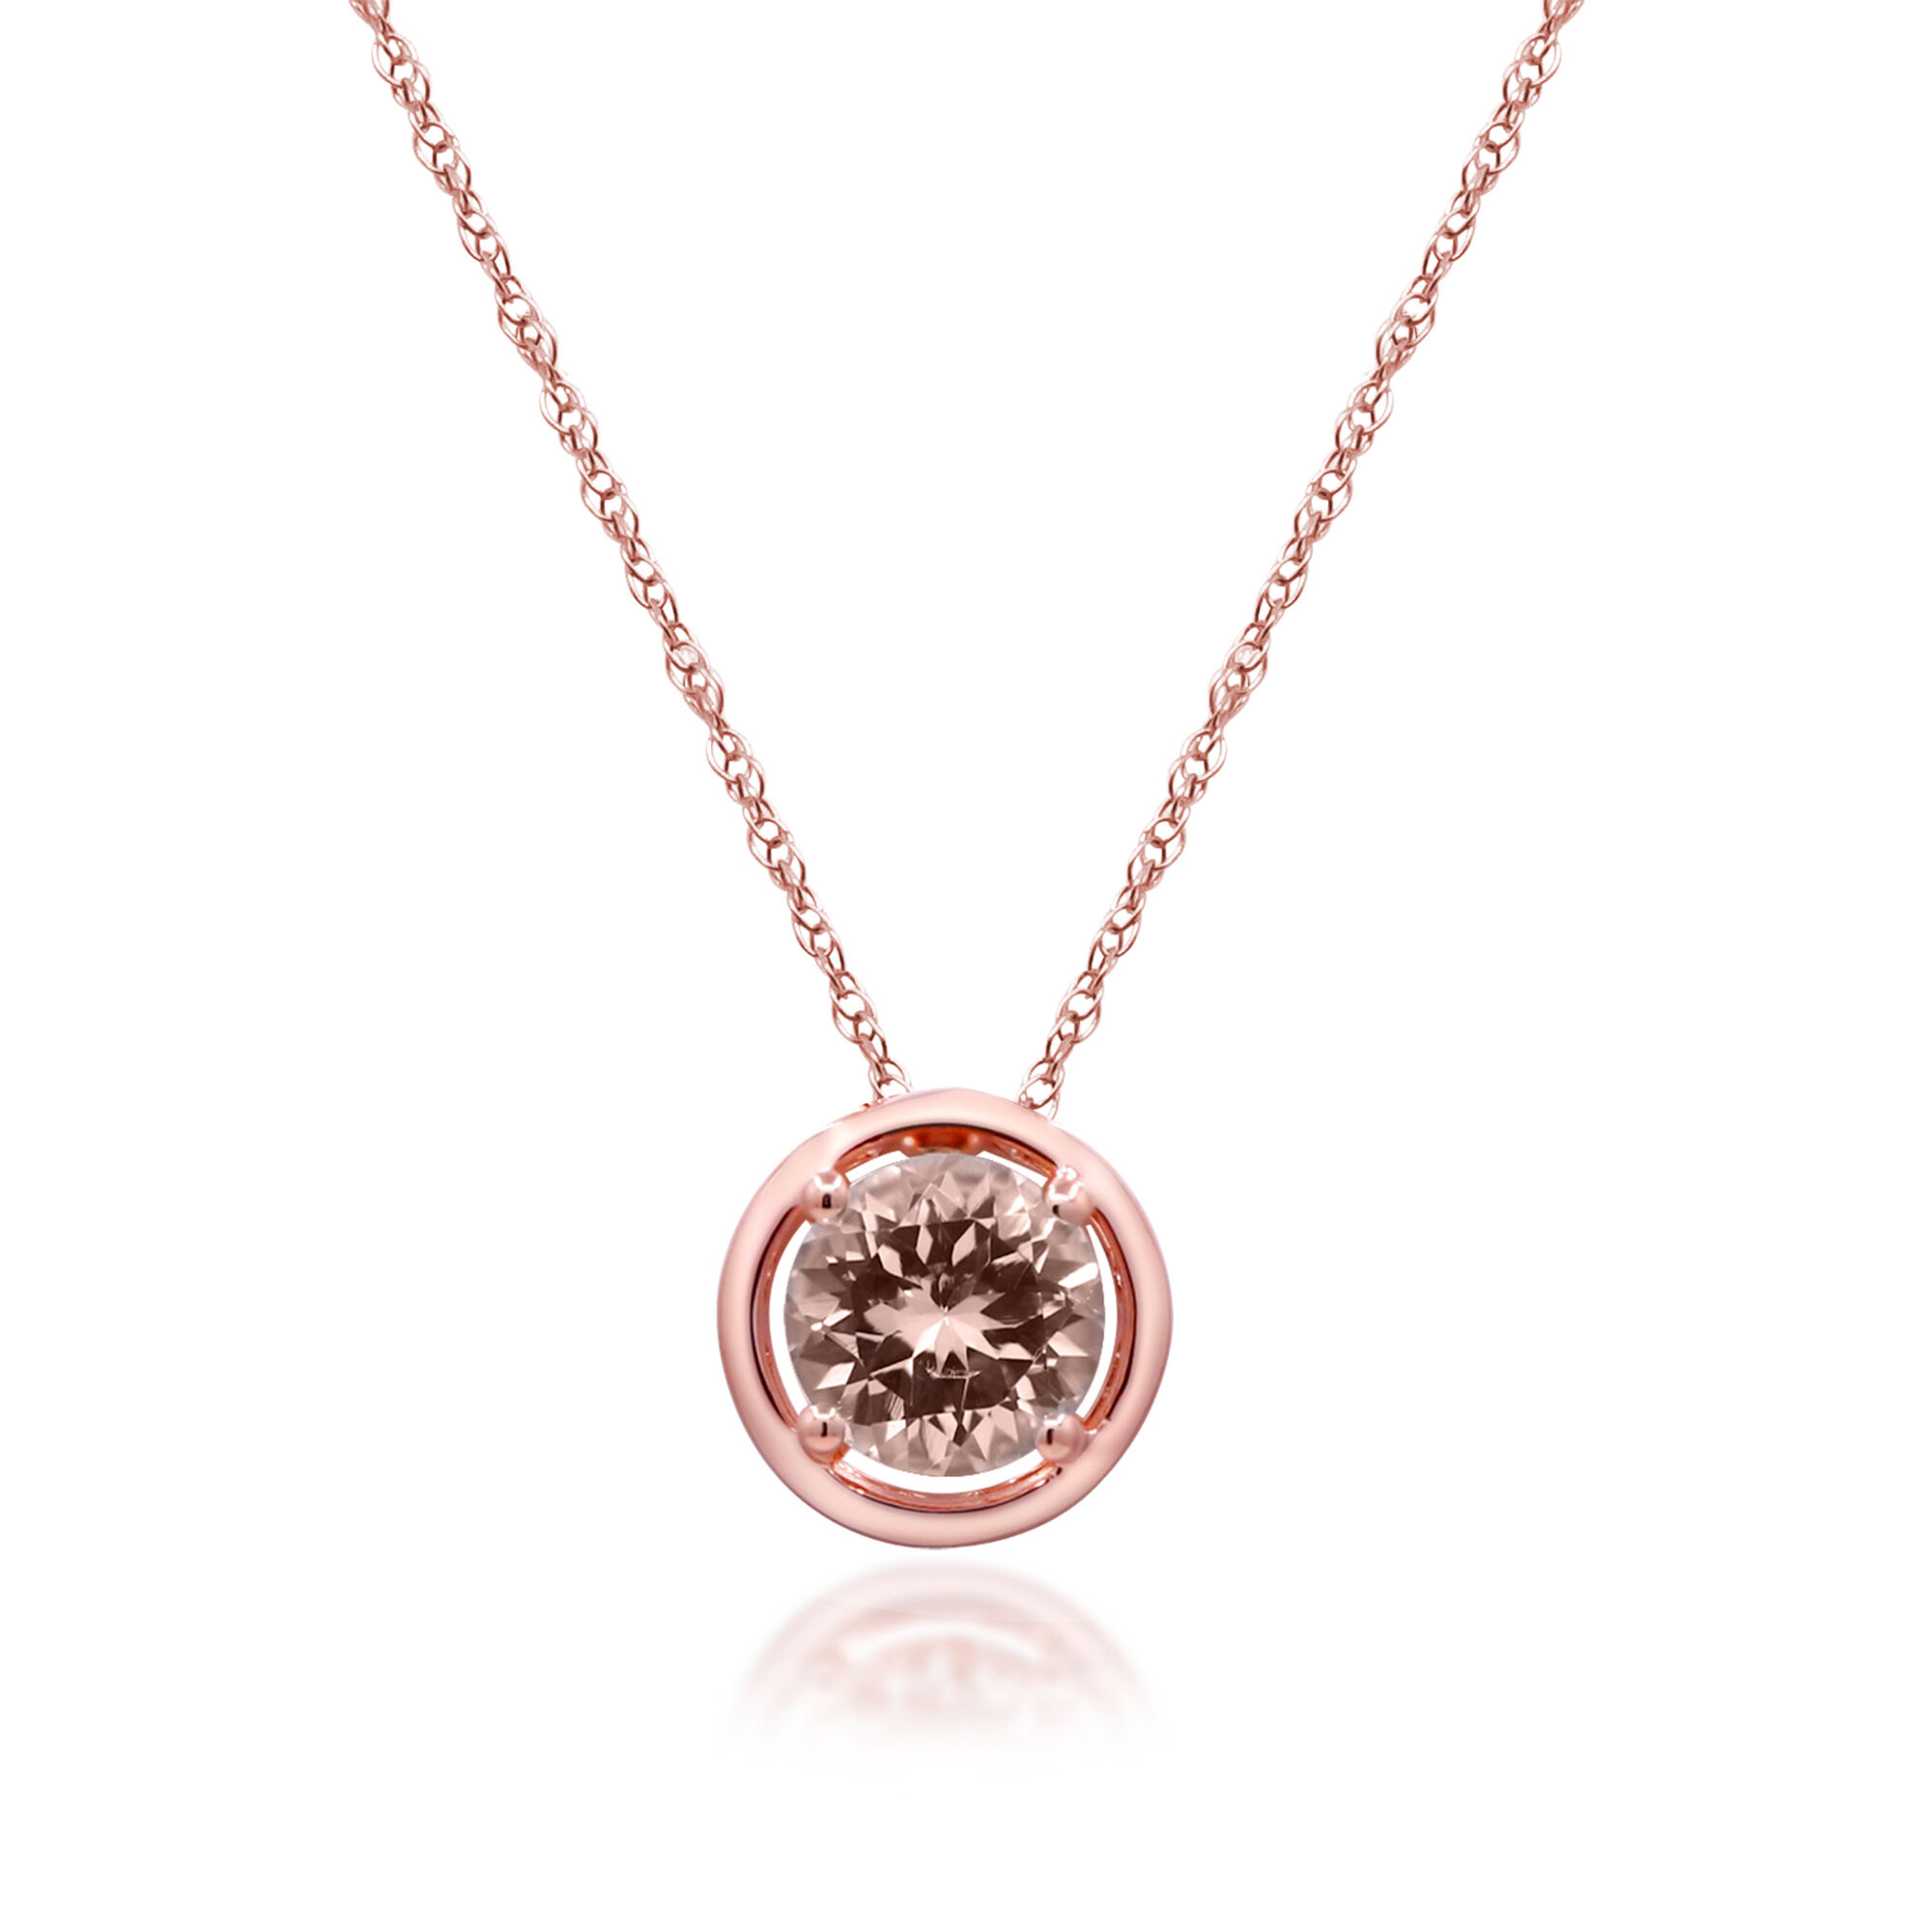 Devon Original Rose Gold Morganite Necklace 45810 - Devon Fine Jewelry